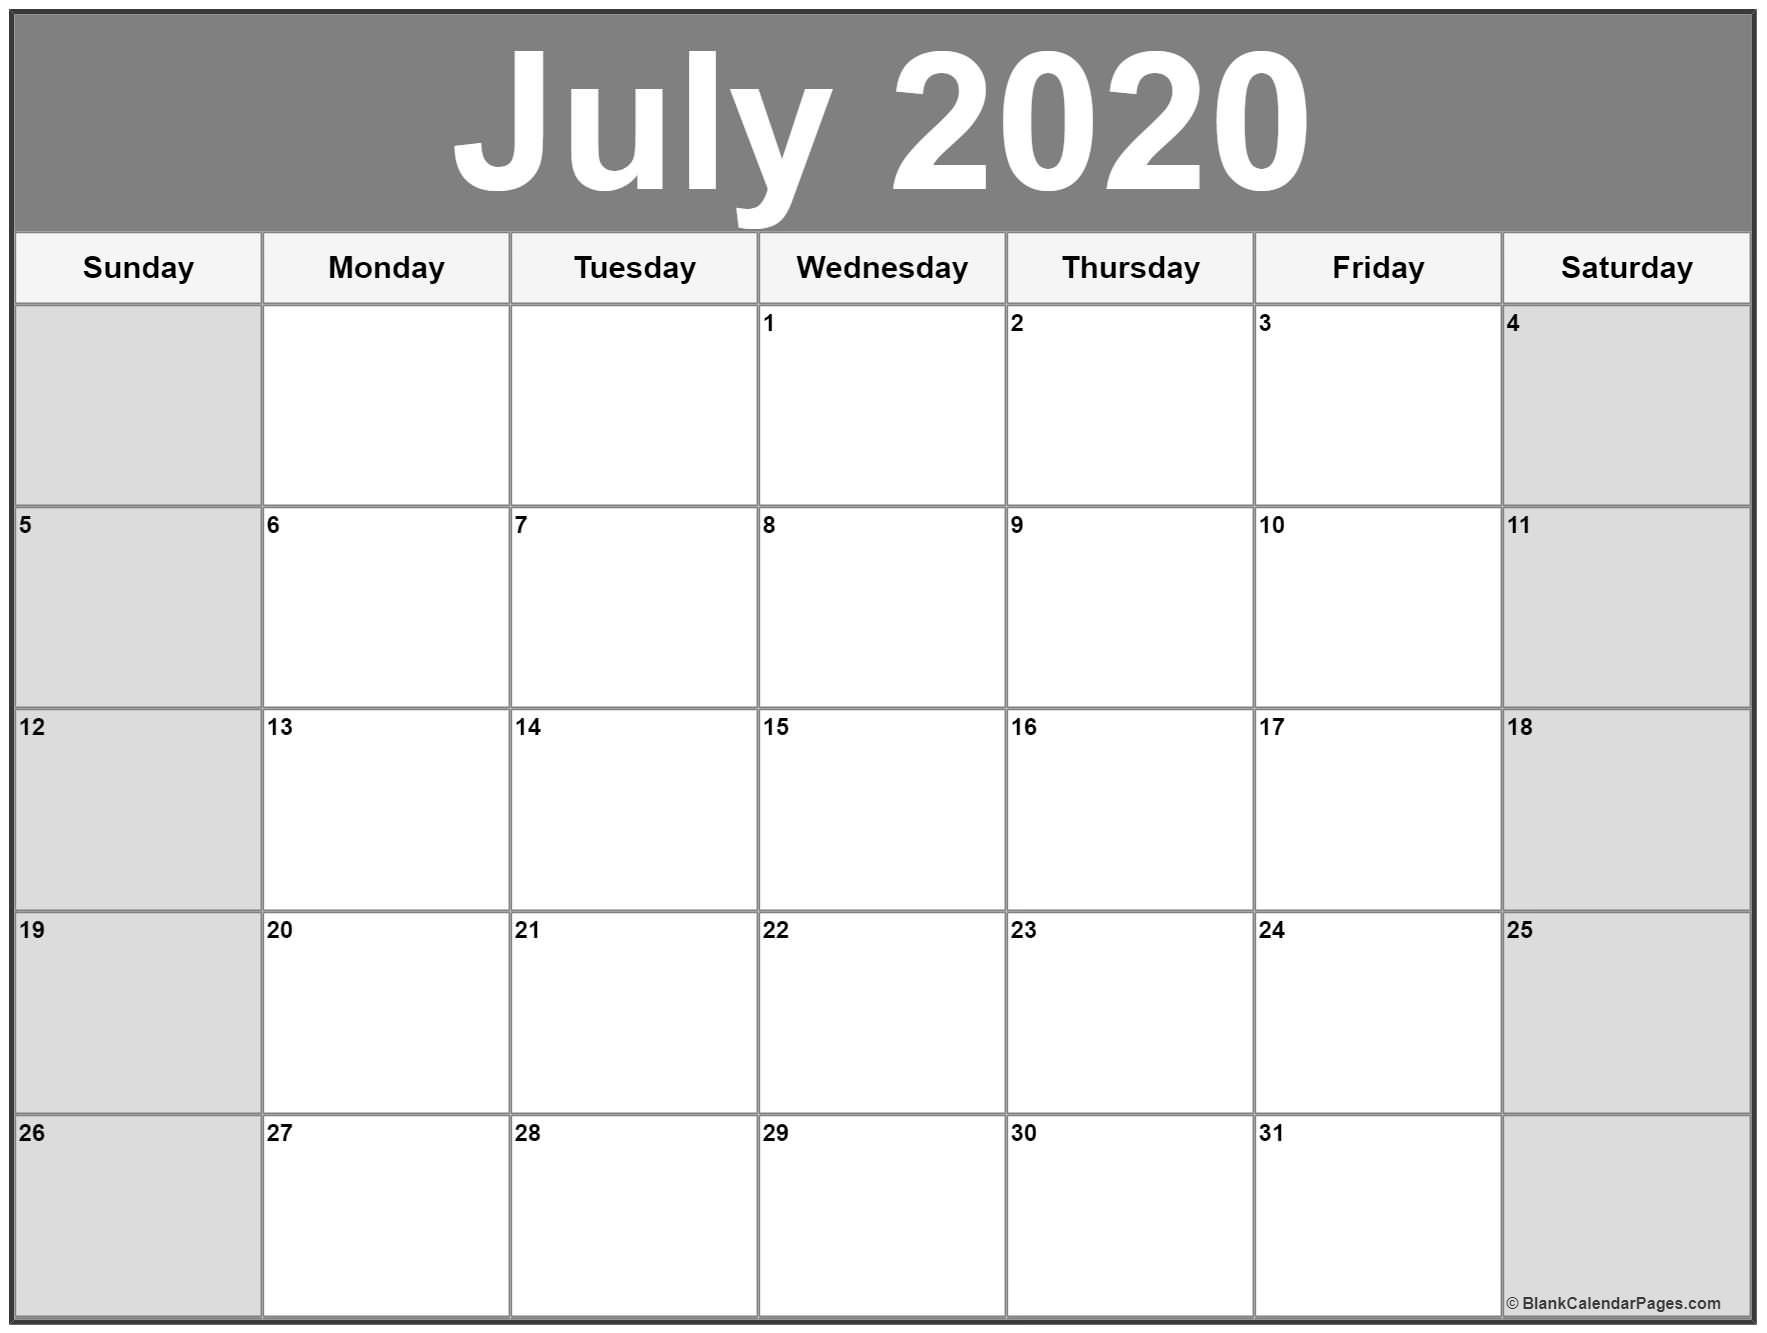 July 2020 Printable Calendar Template #2020Calendars Free Printable Calendar Templates Portrait